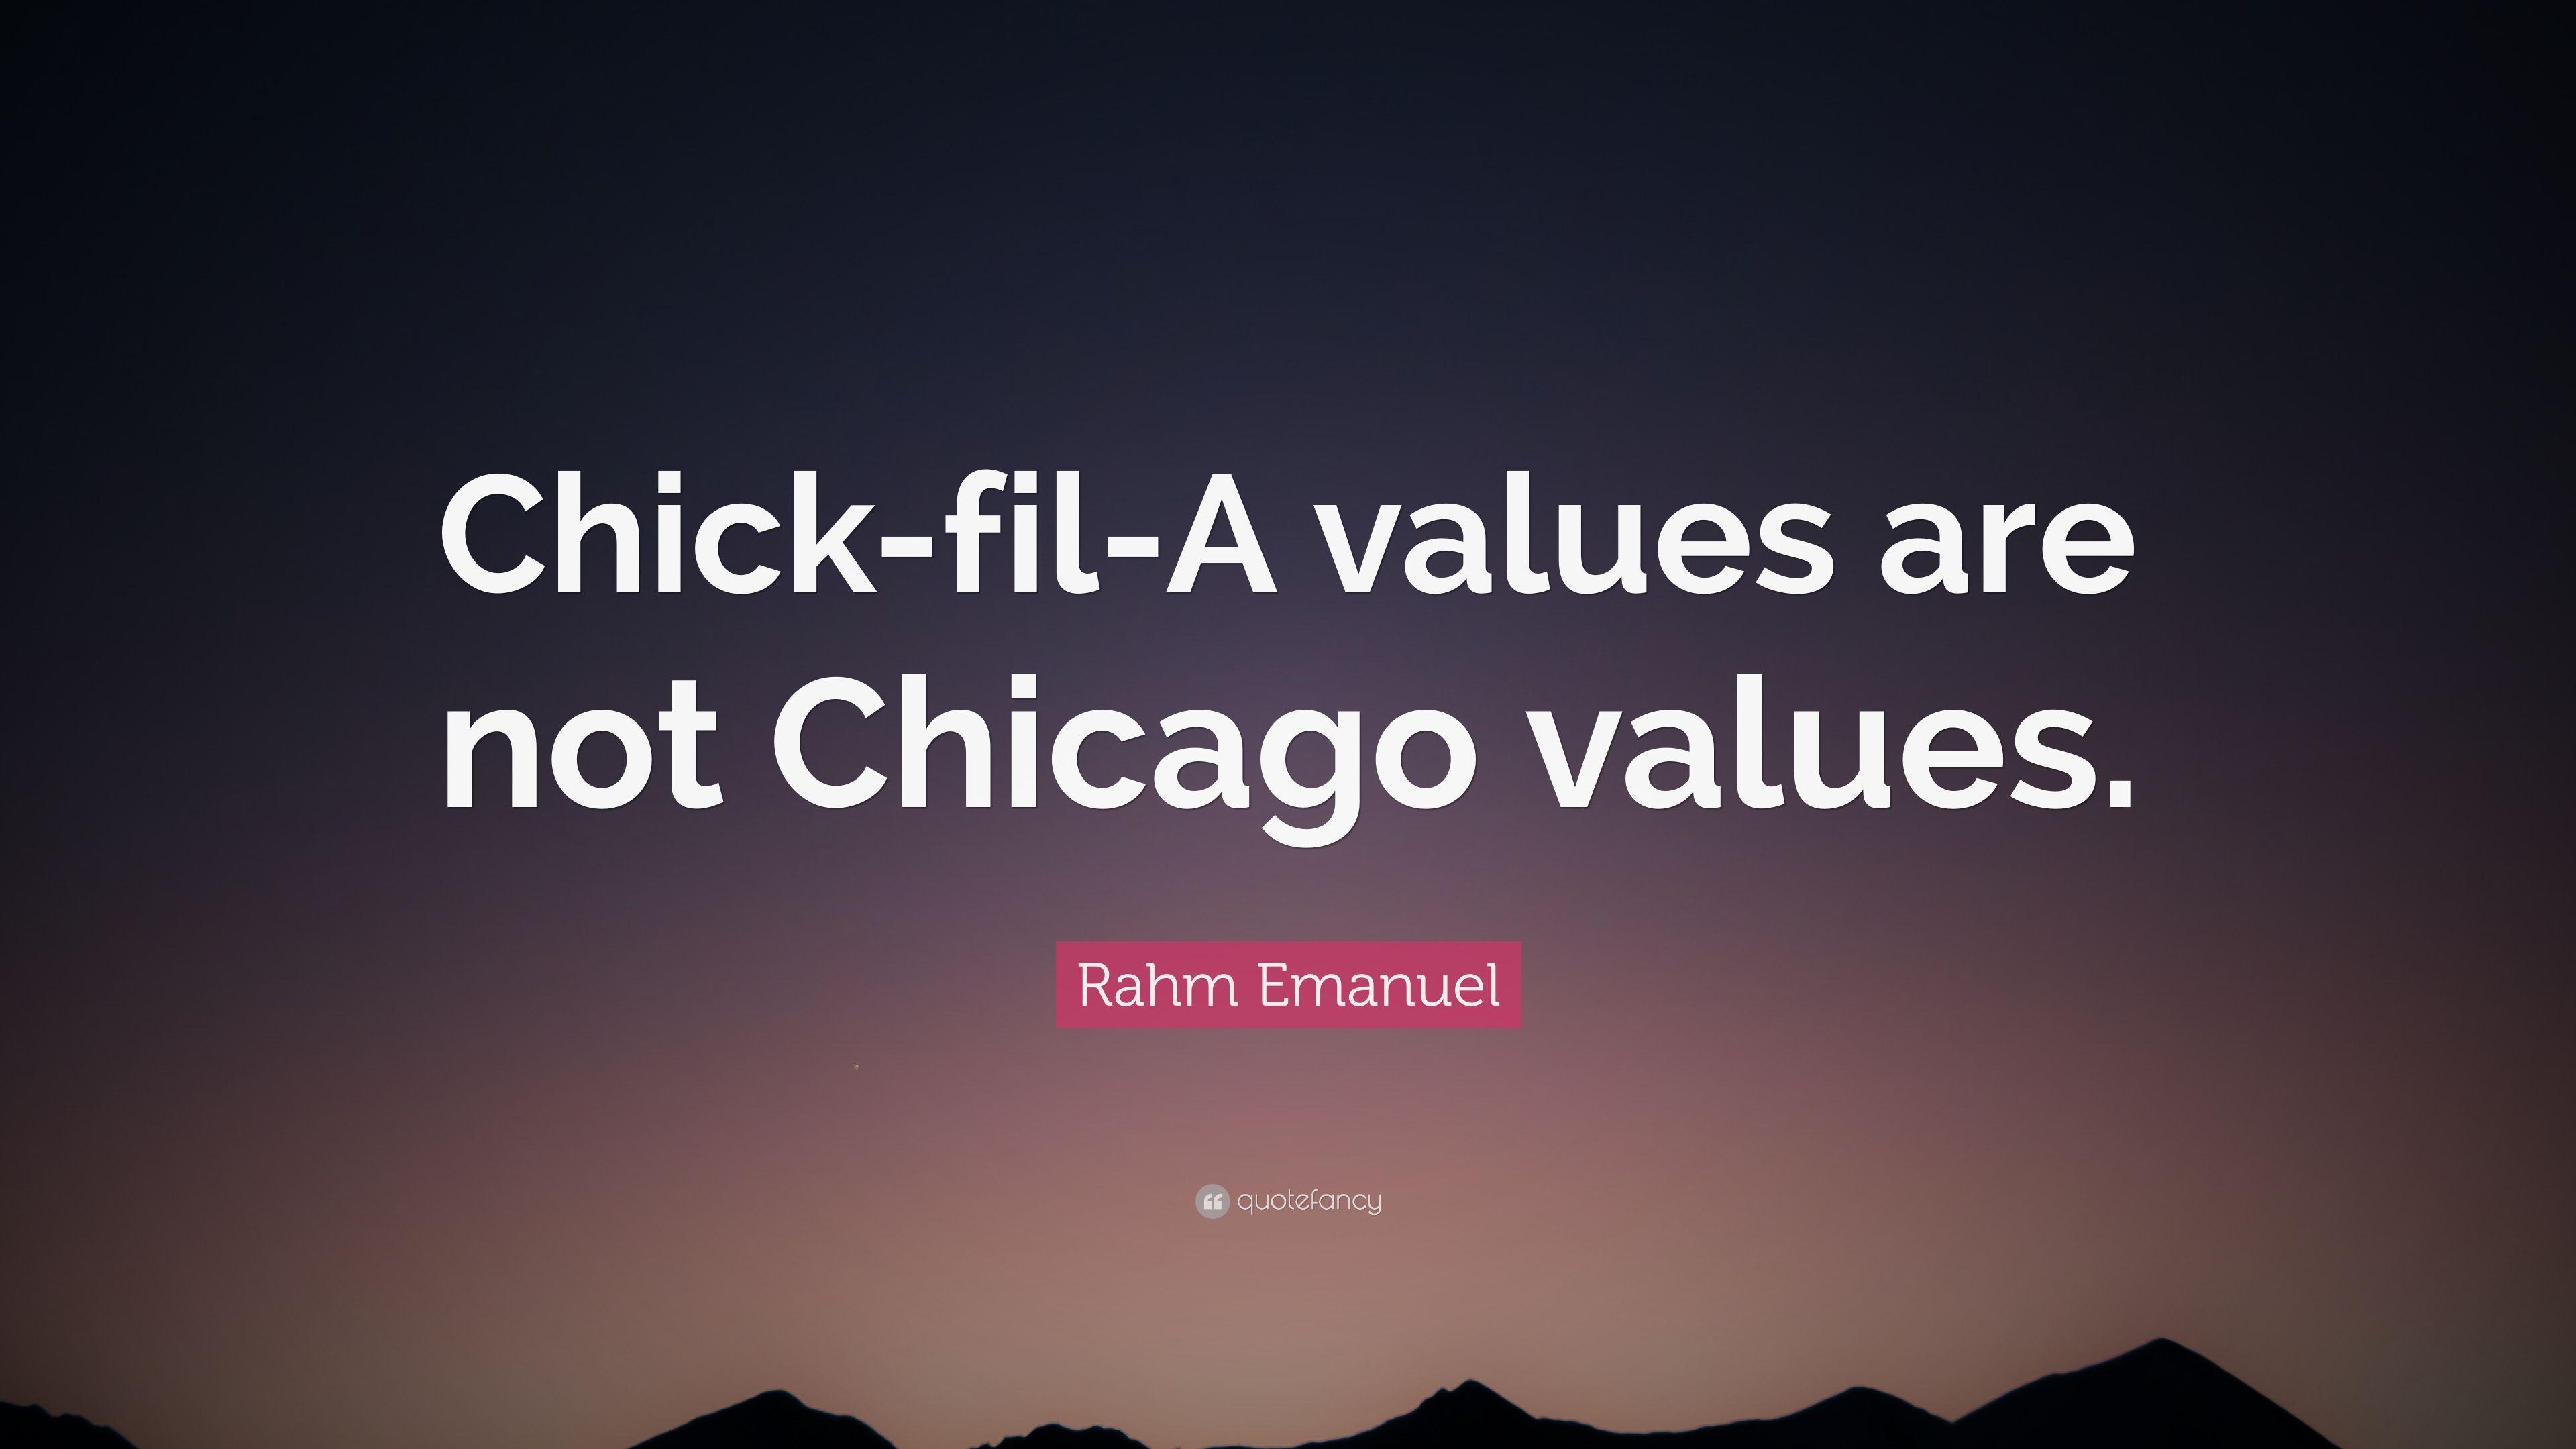 Rahm Emanuel Quote: “Chick